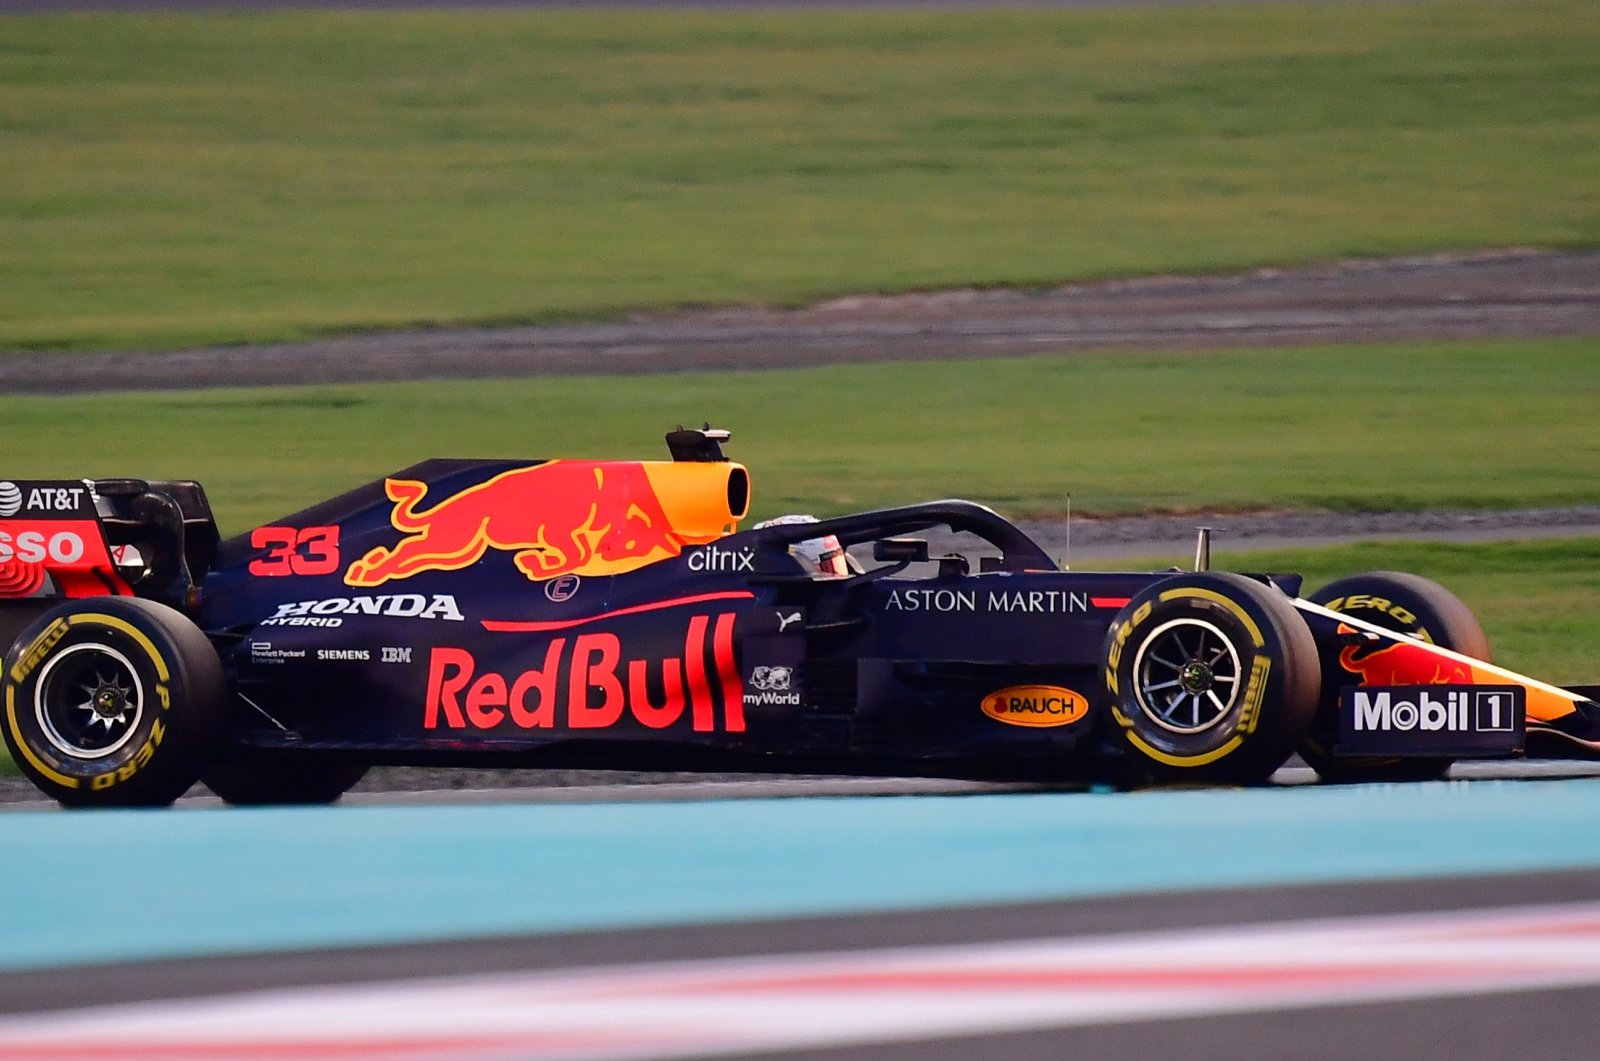 Red Bull's Max Verstappen in action during the Abu Dhabi Grand Prix, Yas Marina Circuit, Abu Dhabi, United Arab Emirates, Dec. 13, 2020. (Reuters Photo)